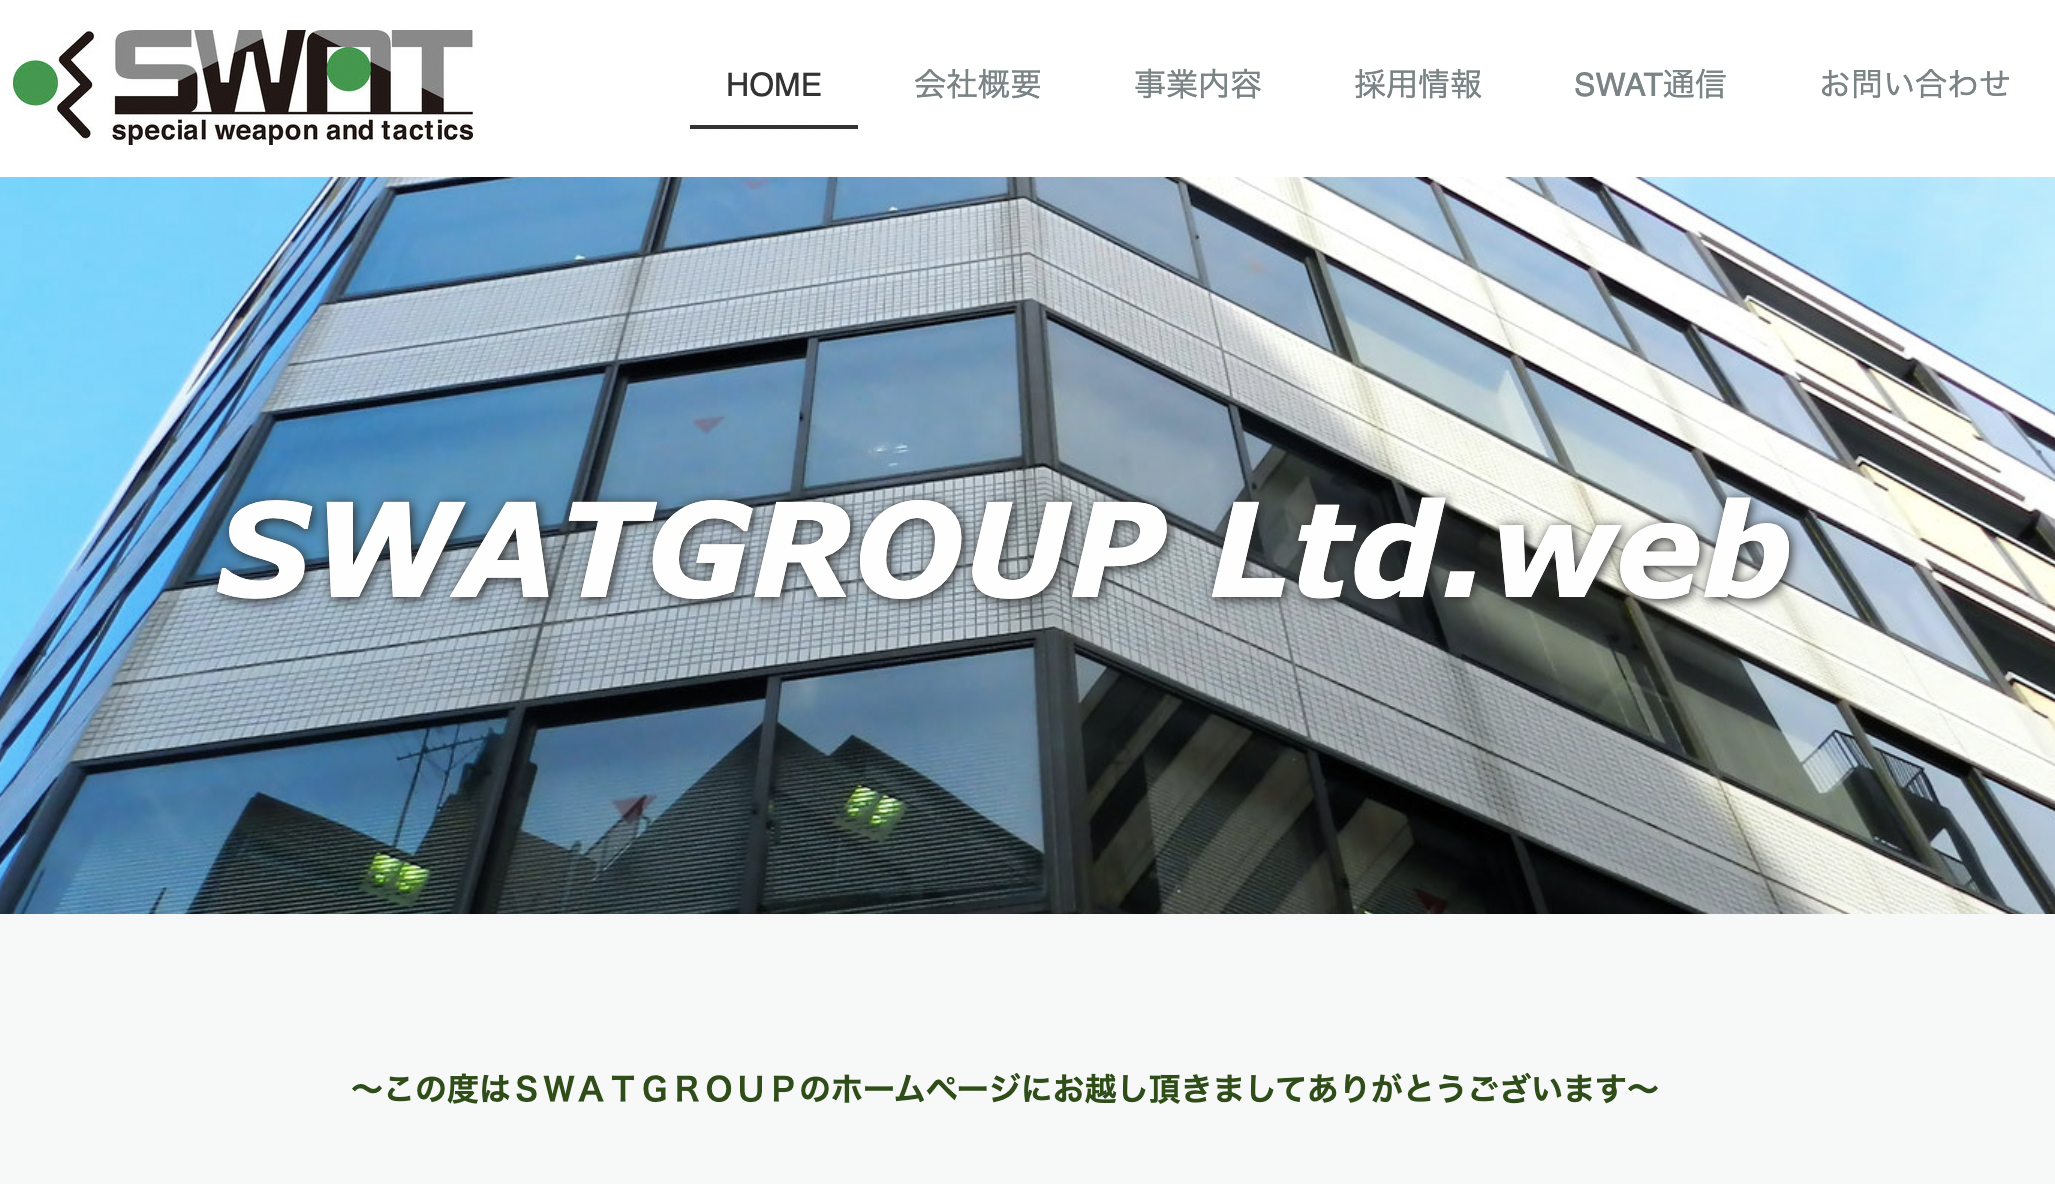 SWATGROUP Ltd.